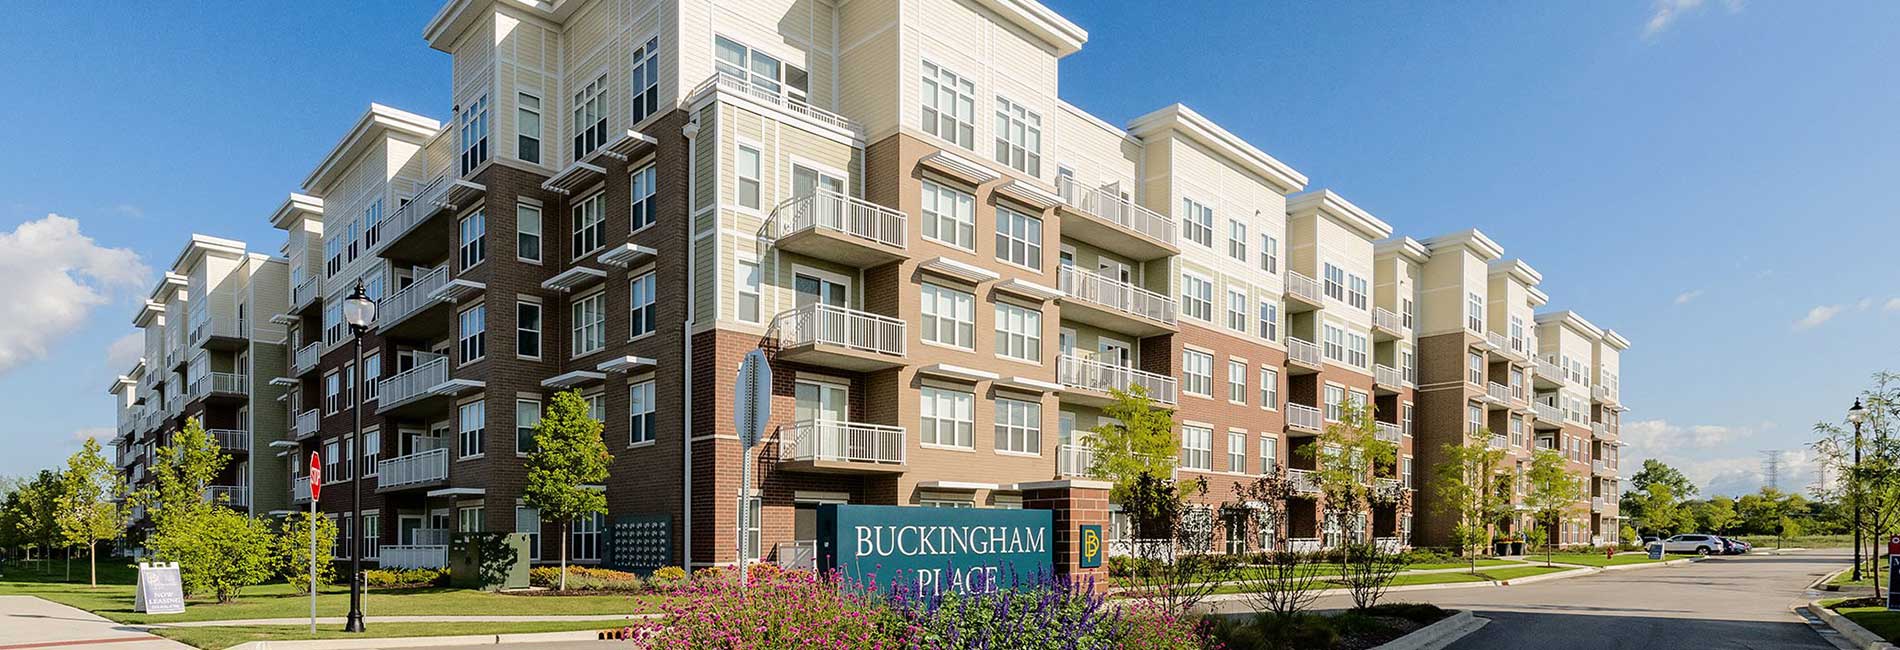 Buckingham Place Apartments for Rent in Des Plaines, Illinois